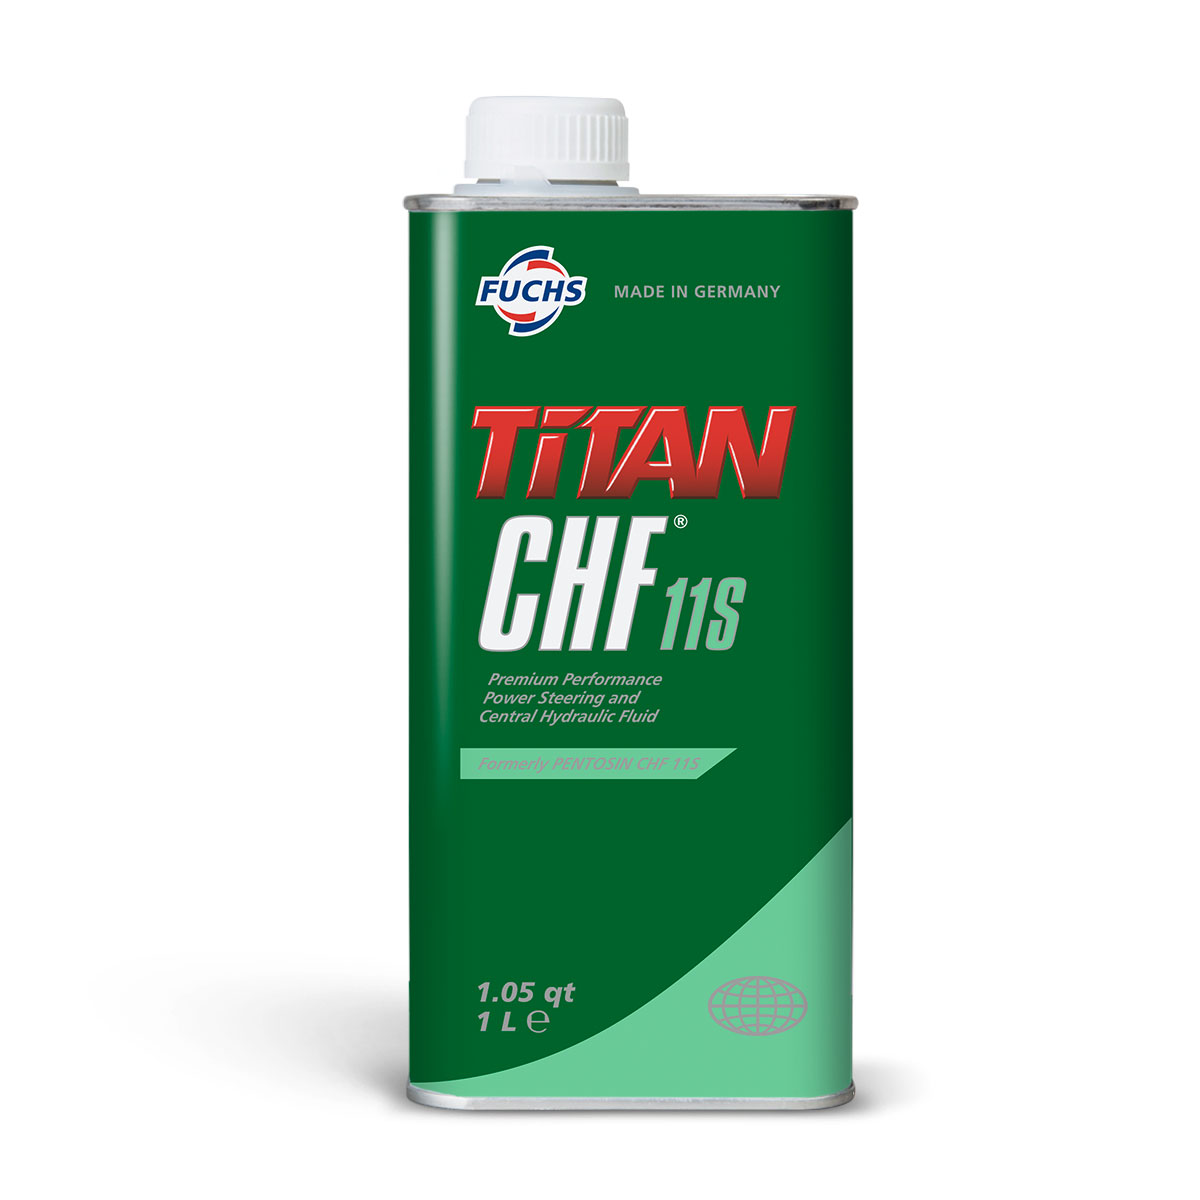 Titan CHF 11S